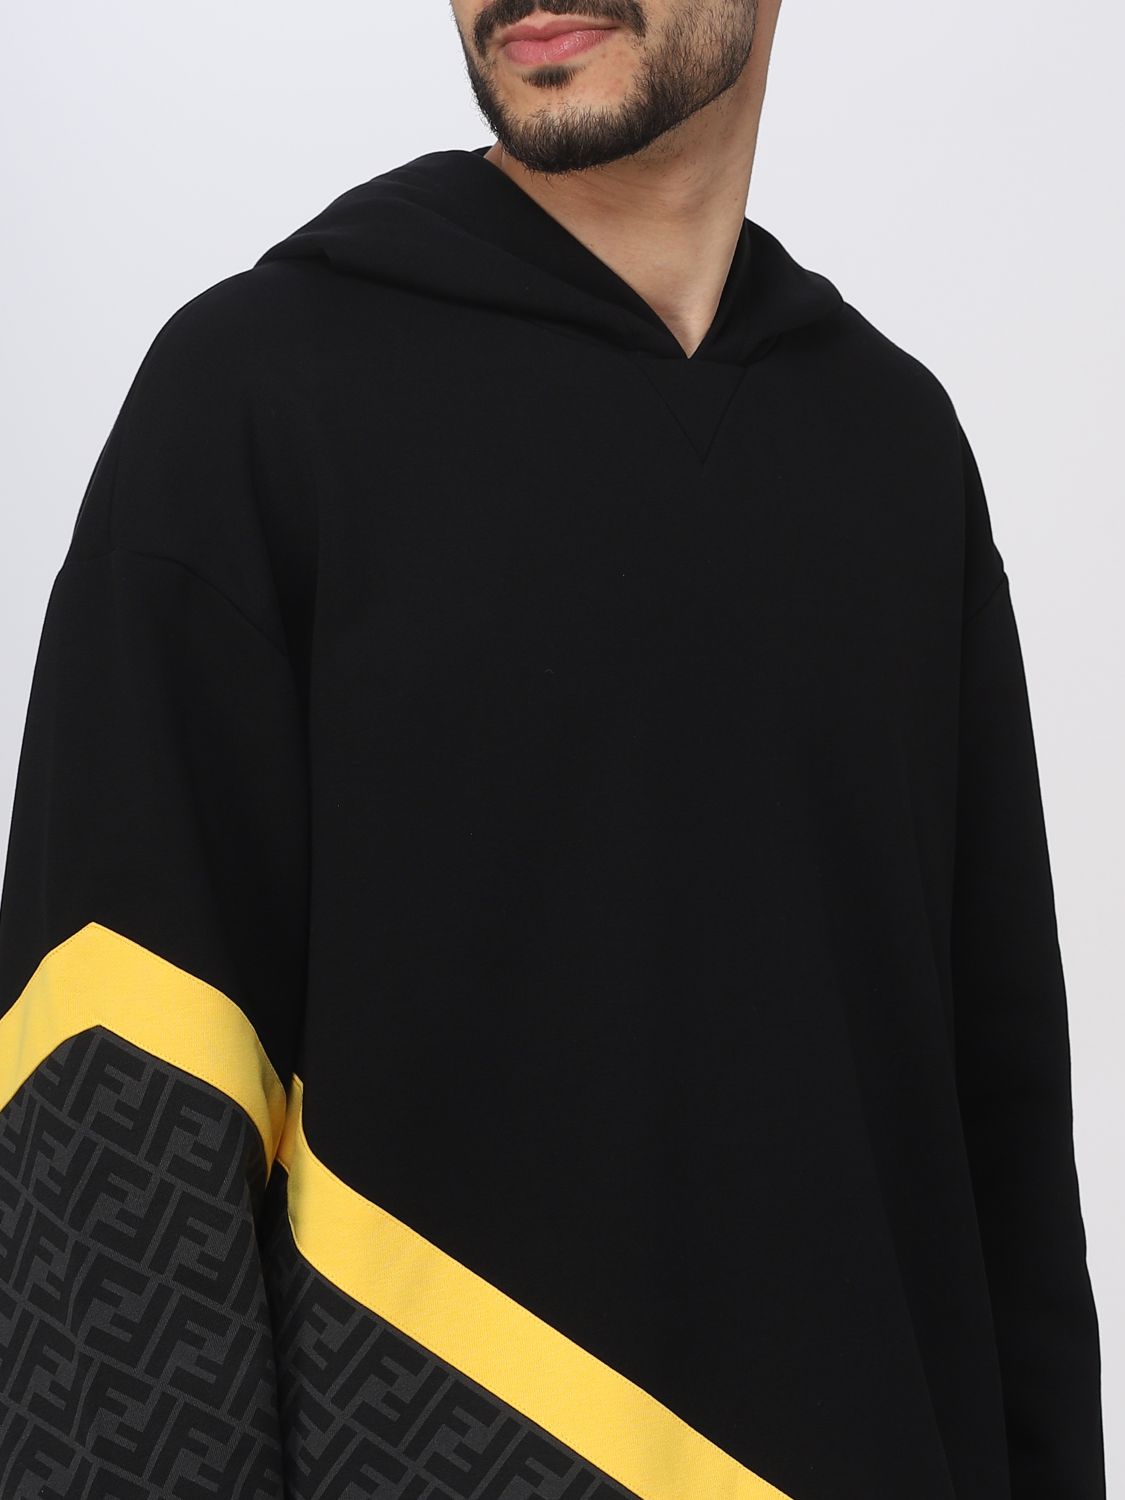 FENDI: cotton sweatshirt - Black | Fendi sweatshirt FAF681AN67 online ...